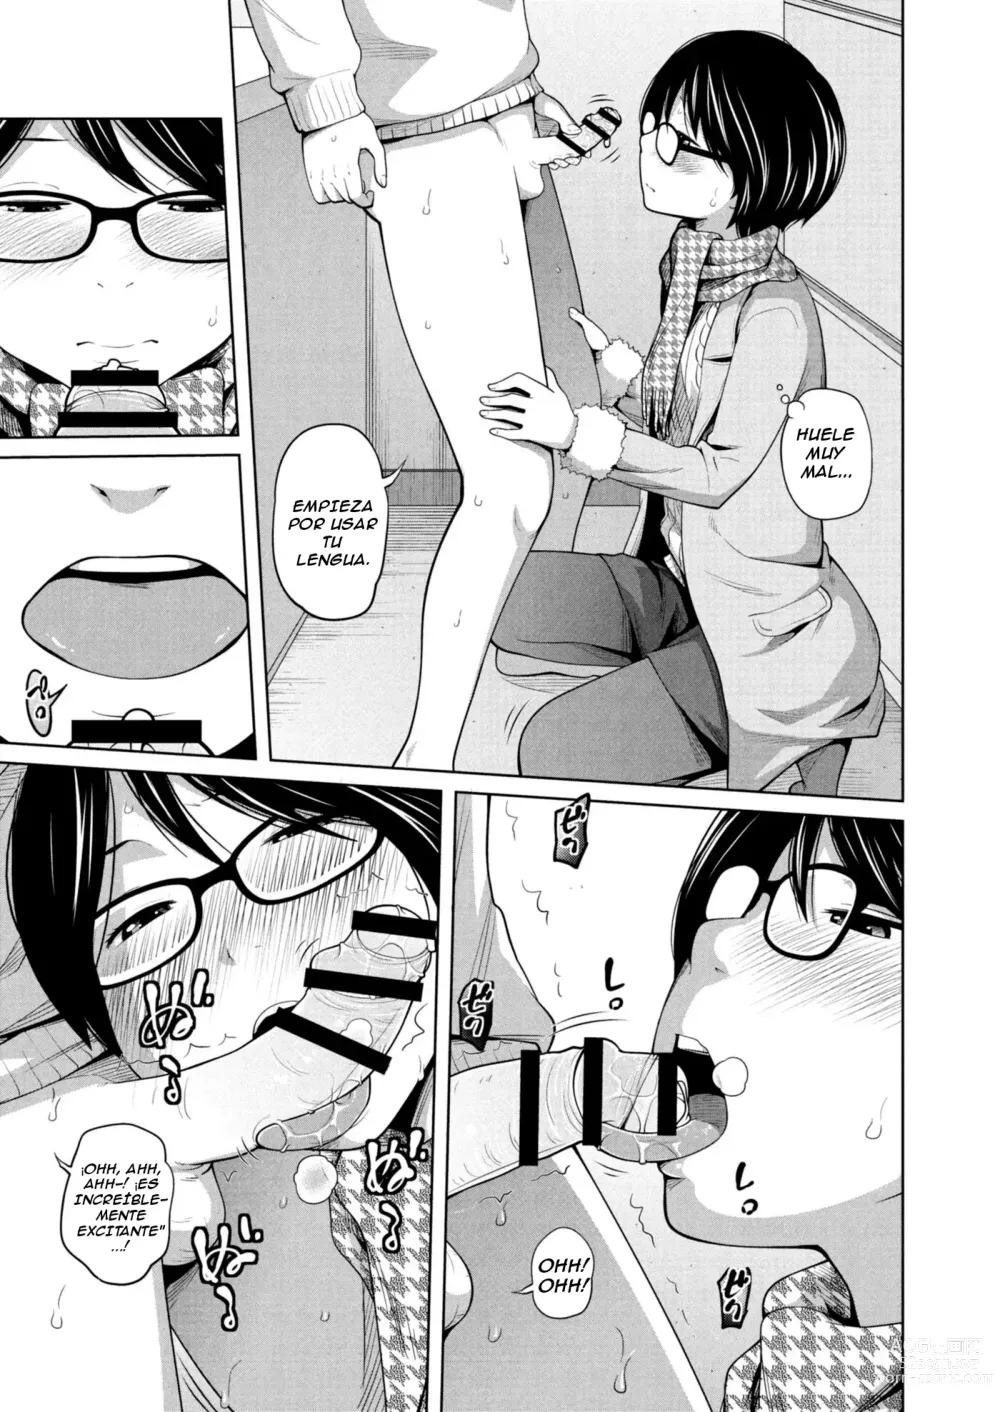 Page 7 of manga Ane Megane 7-wa Yowami wa Tsuyomi!?